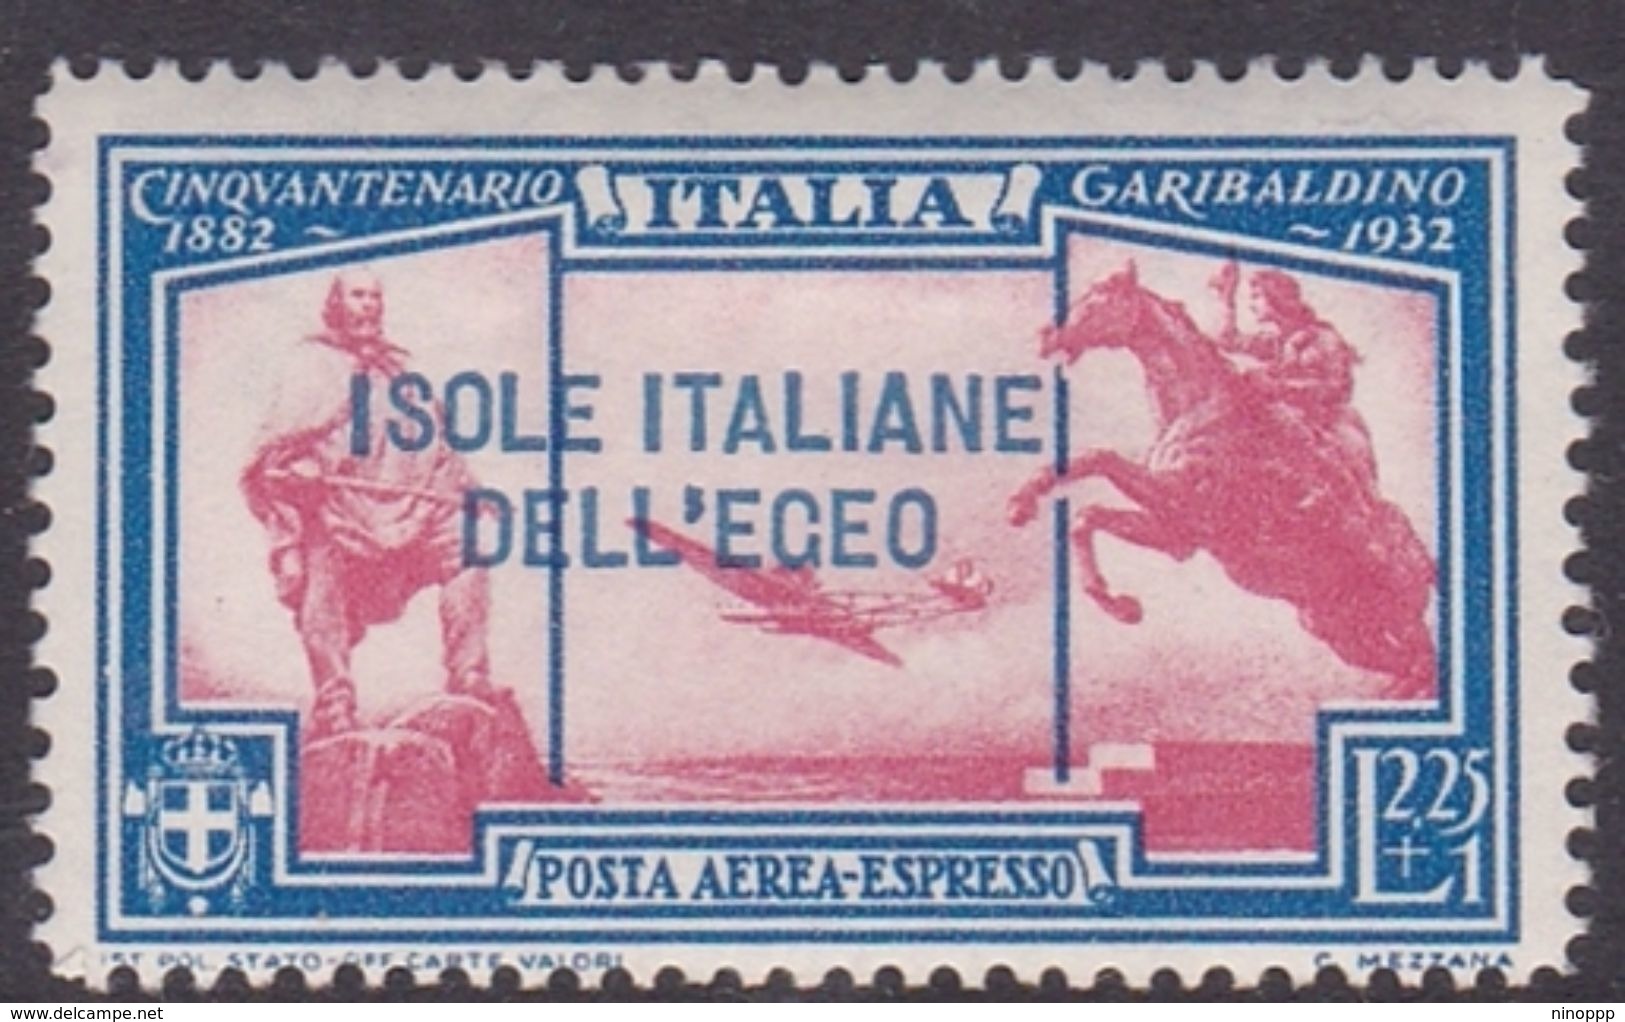 Italy-Colonies And Territories-Aegean General Issue-Rodi A19 1932 Air Mail Garibaldi 2,25 Lira+1 Lira Air Express MH - Algemene Uitgaven